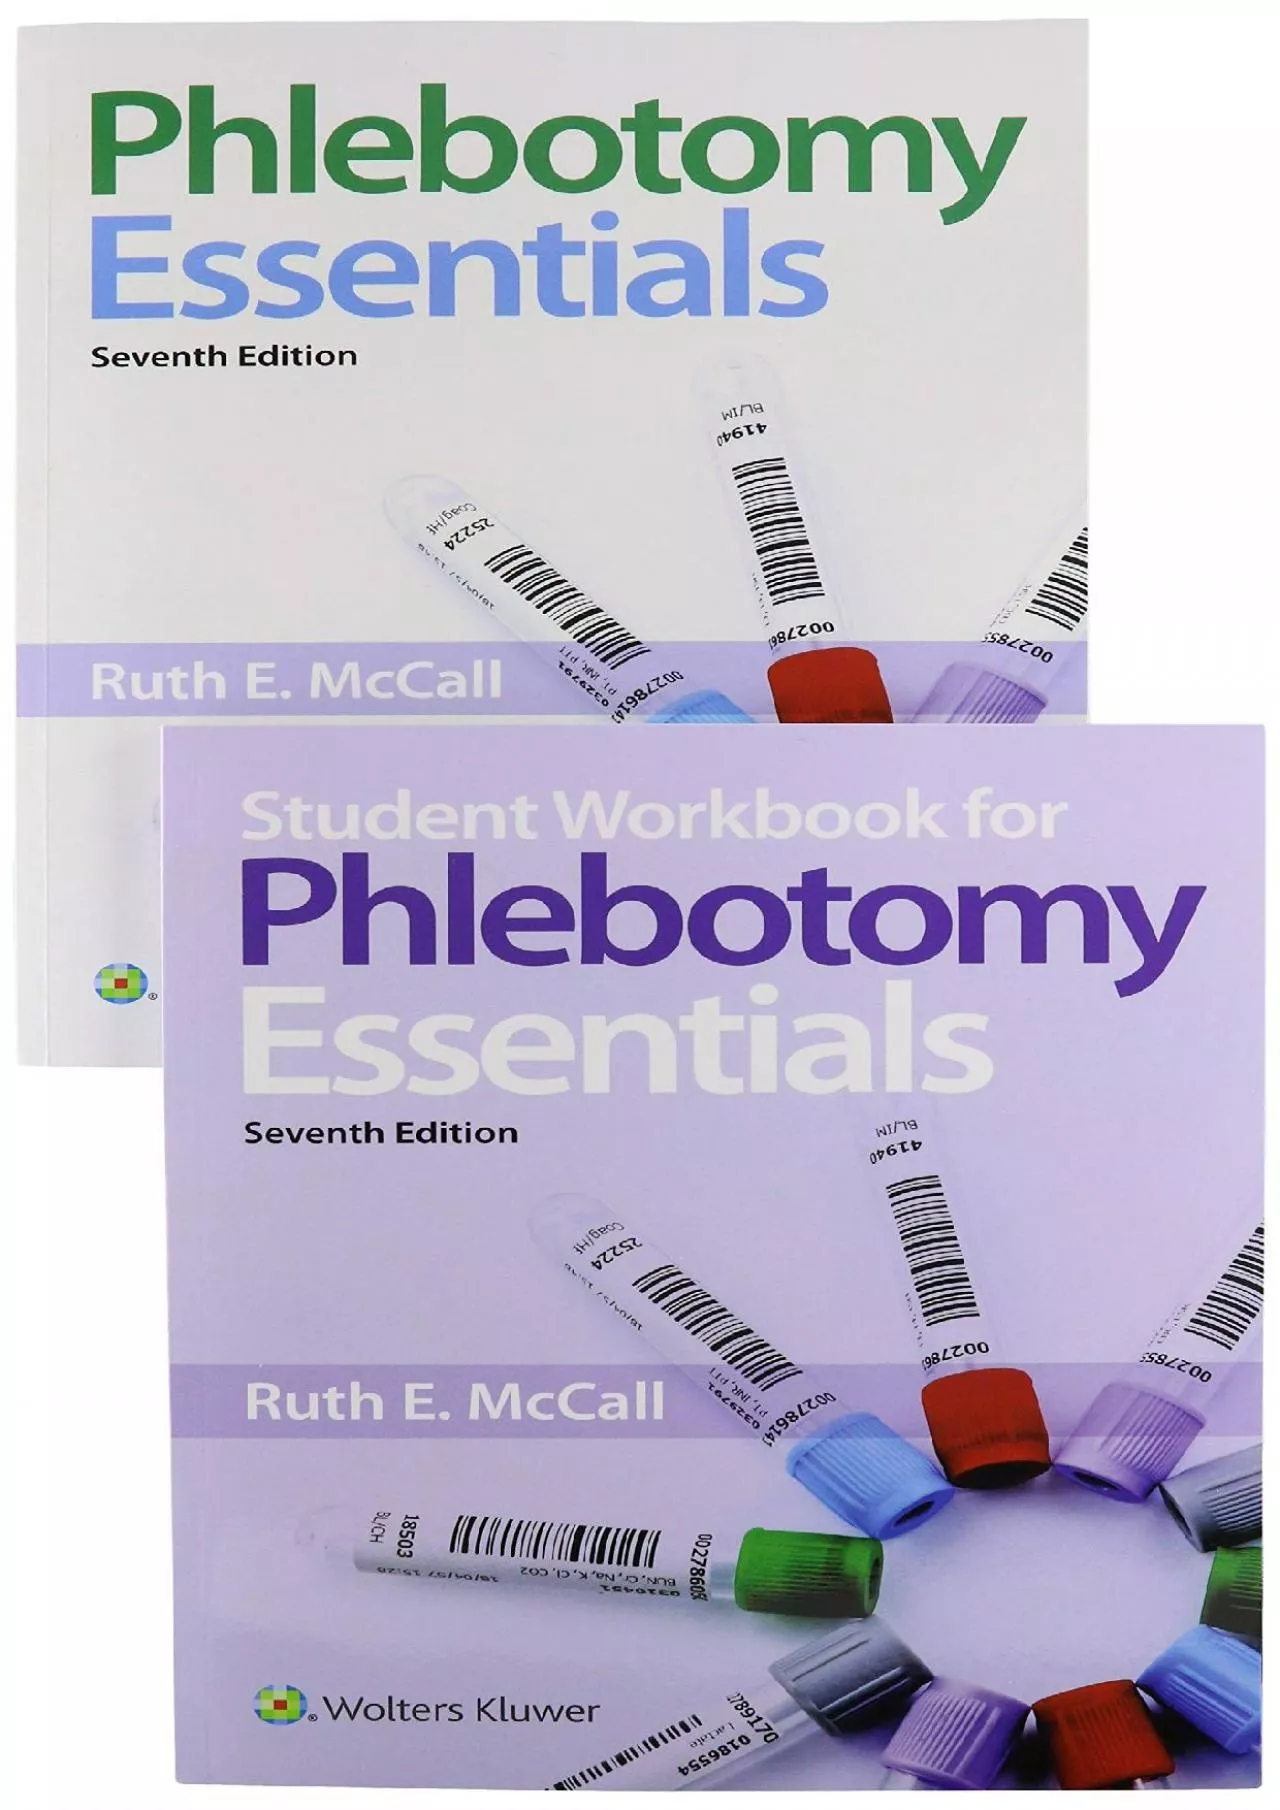 (EBOOK)-Phlebotomy Essentials with Student Workbook